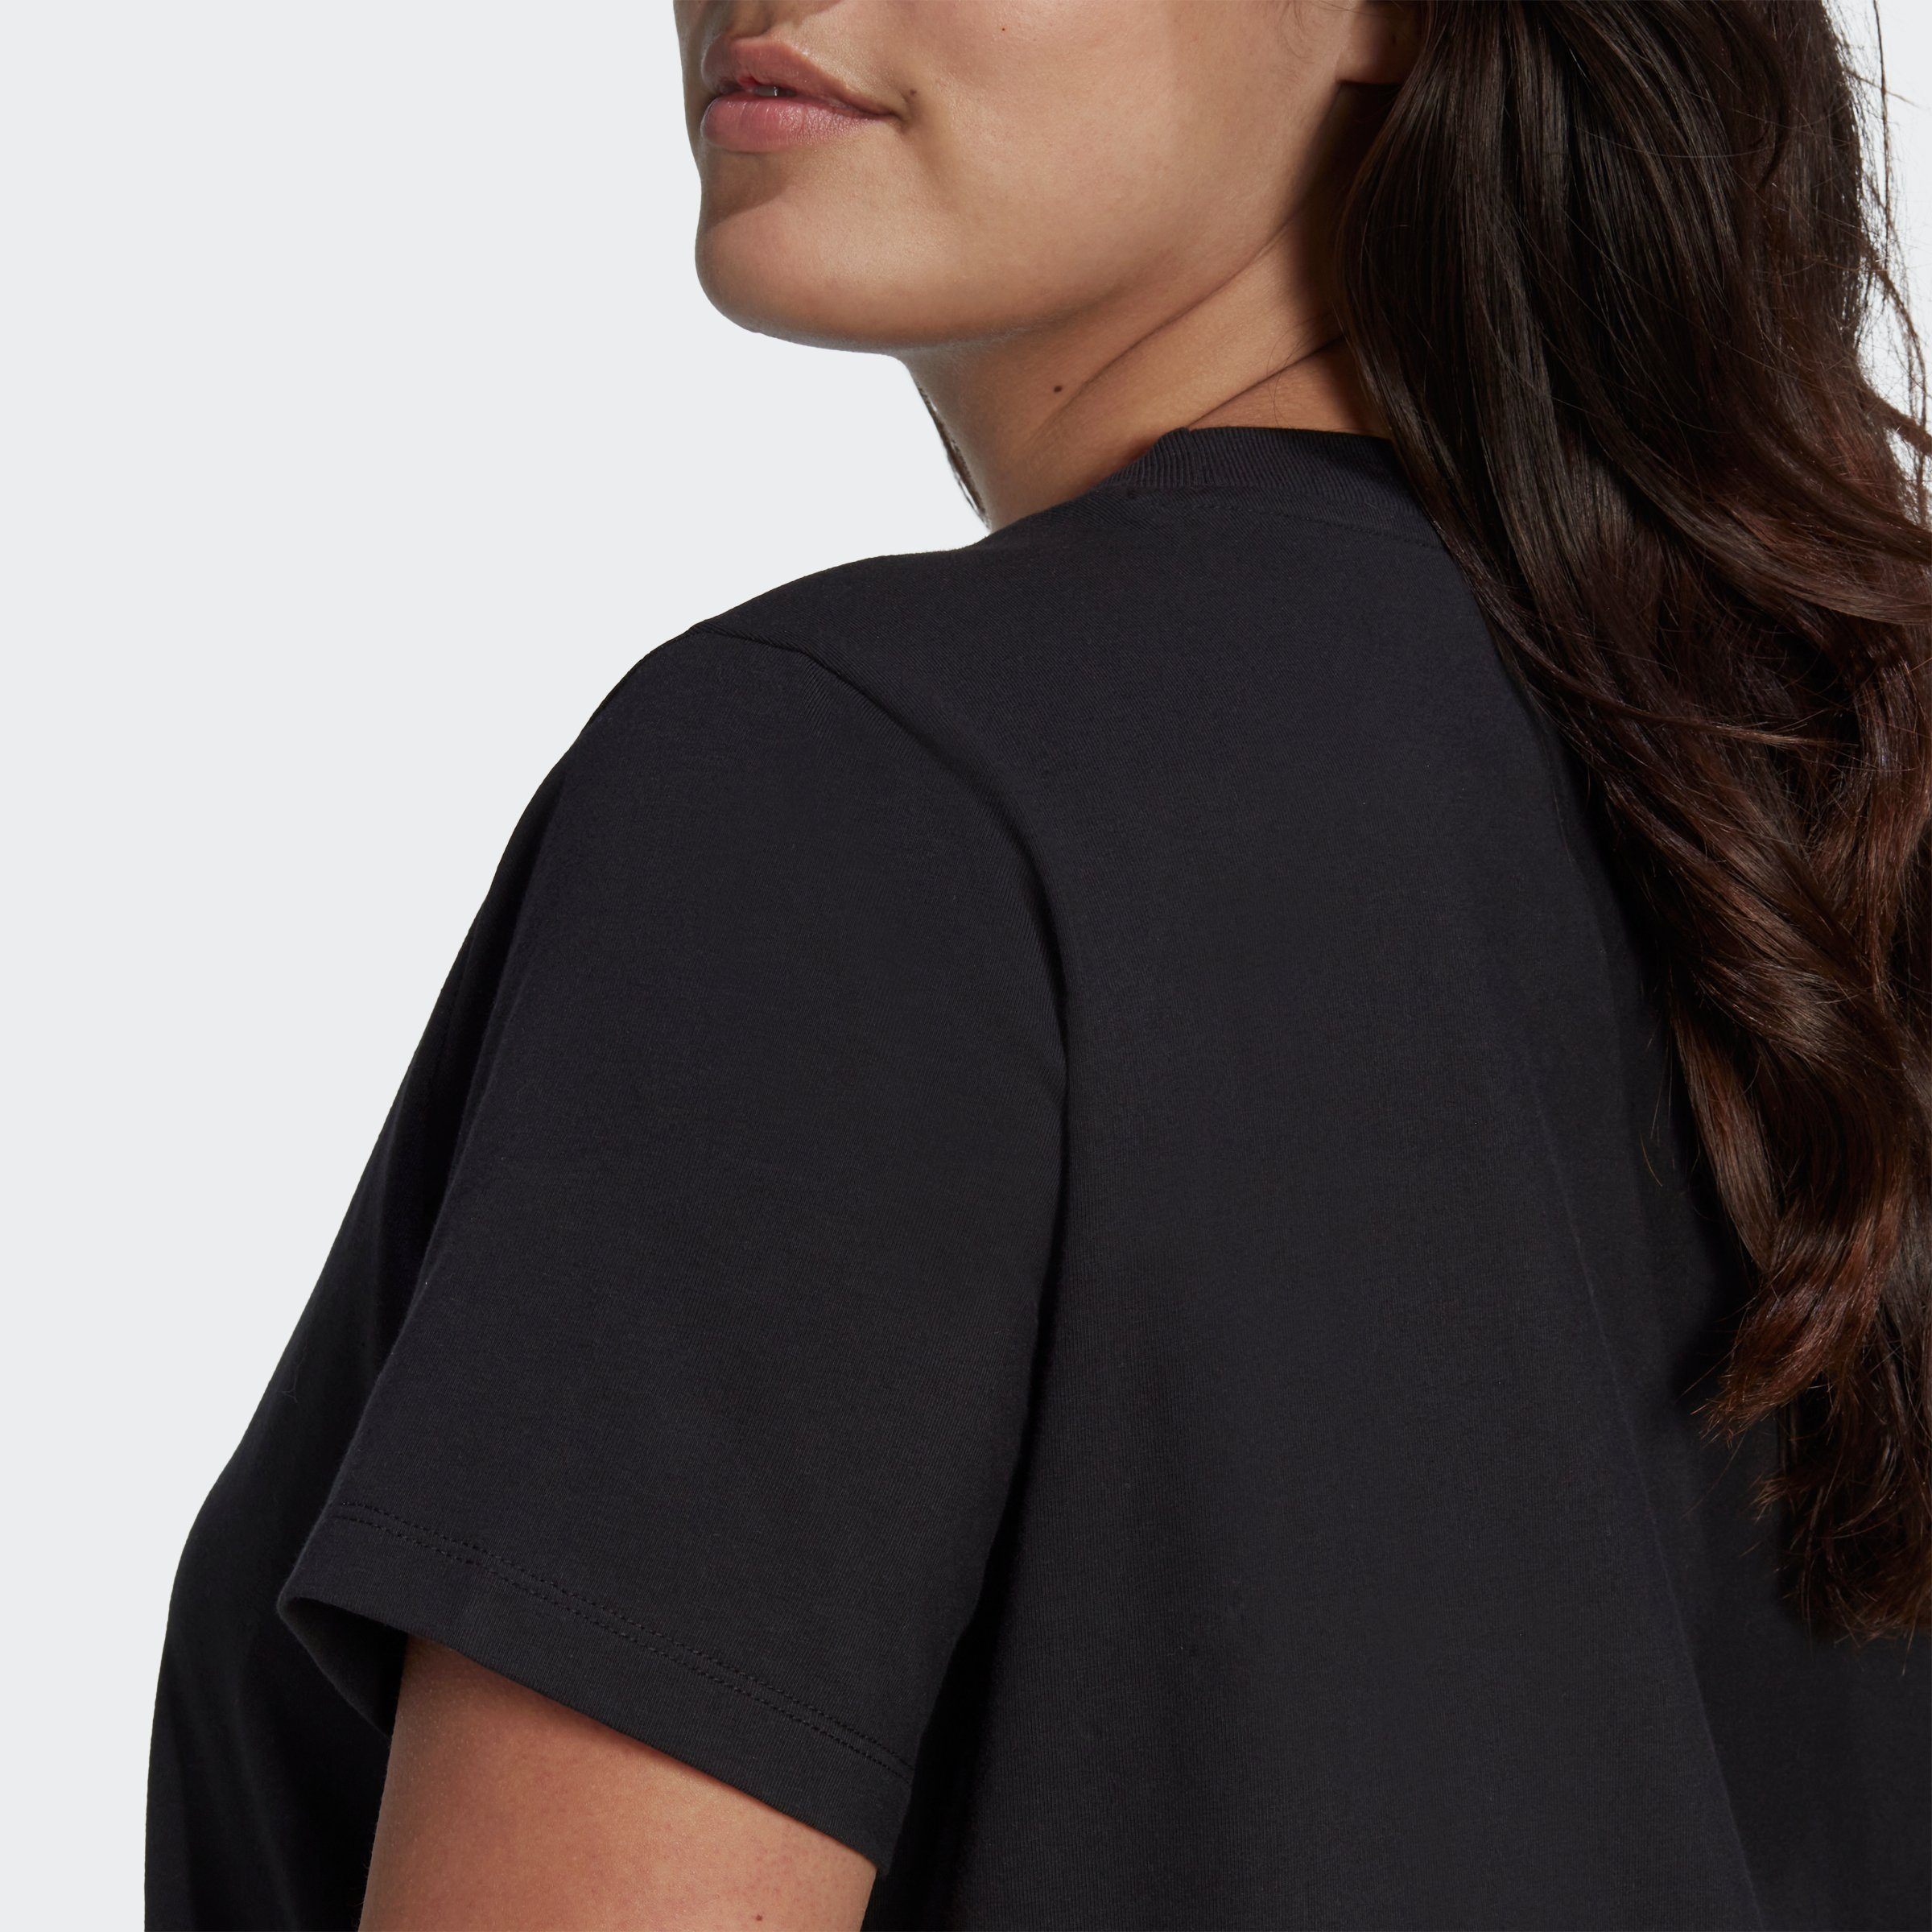 adidas Originals T-Shirt – TREFOIL Black GRÖSSEN GROSSE ADICOLOR CLASSICS